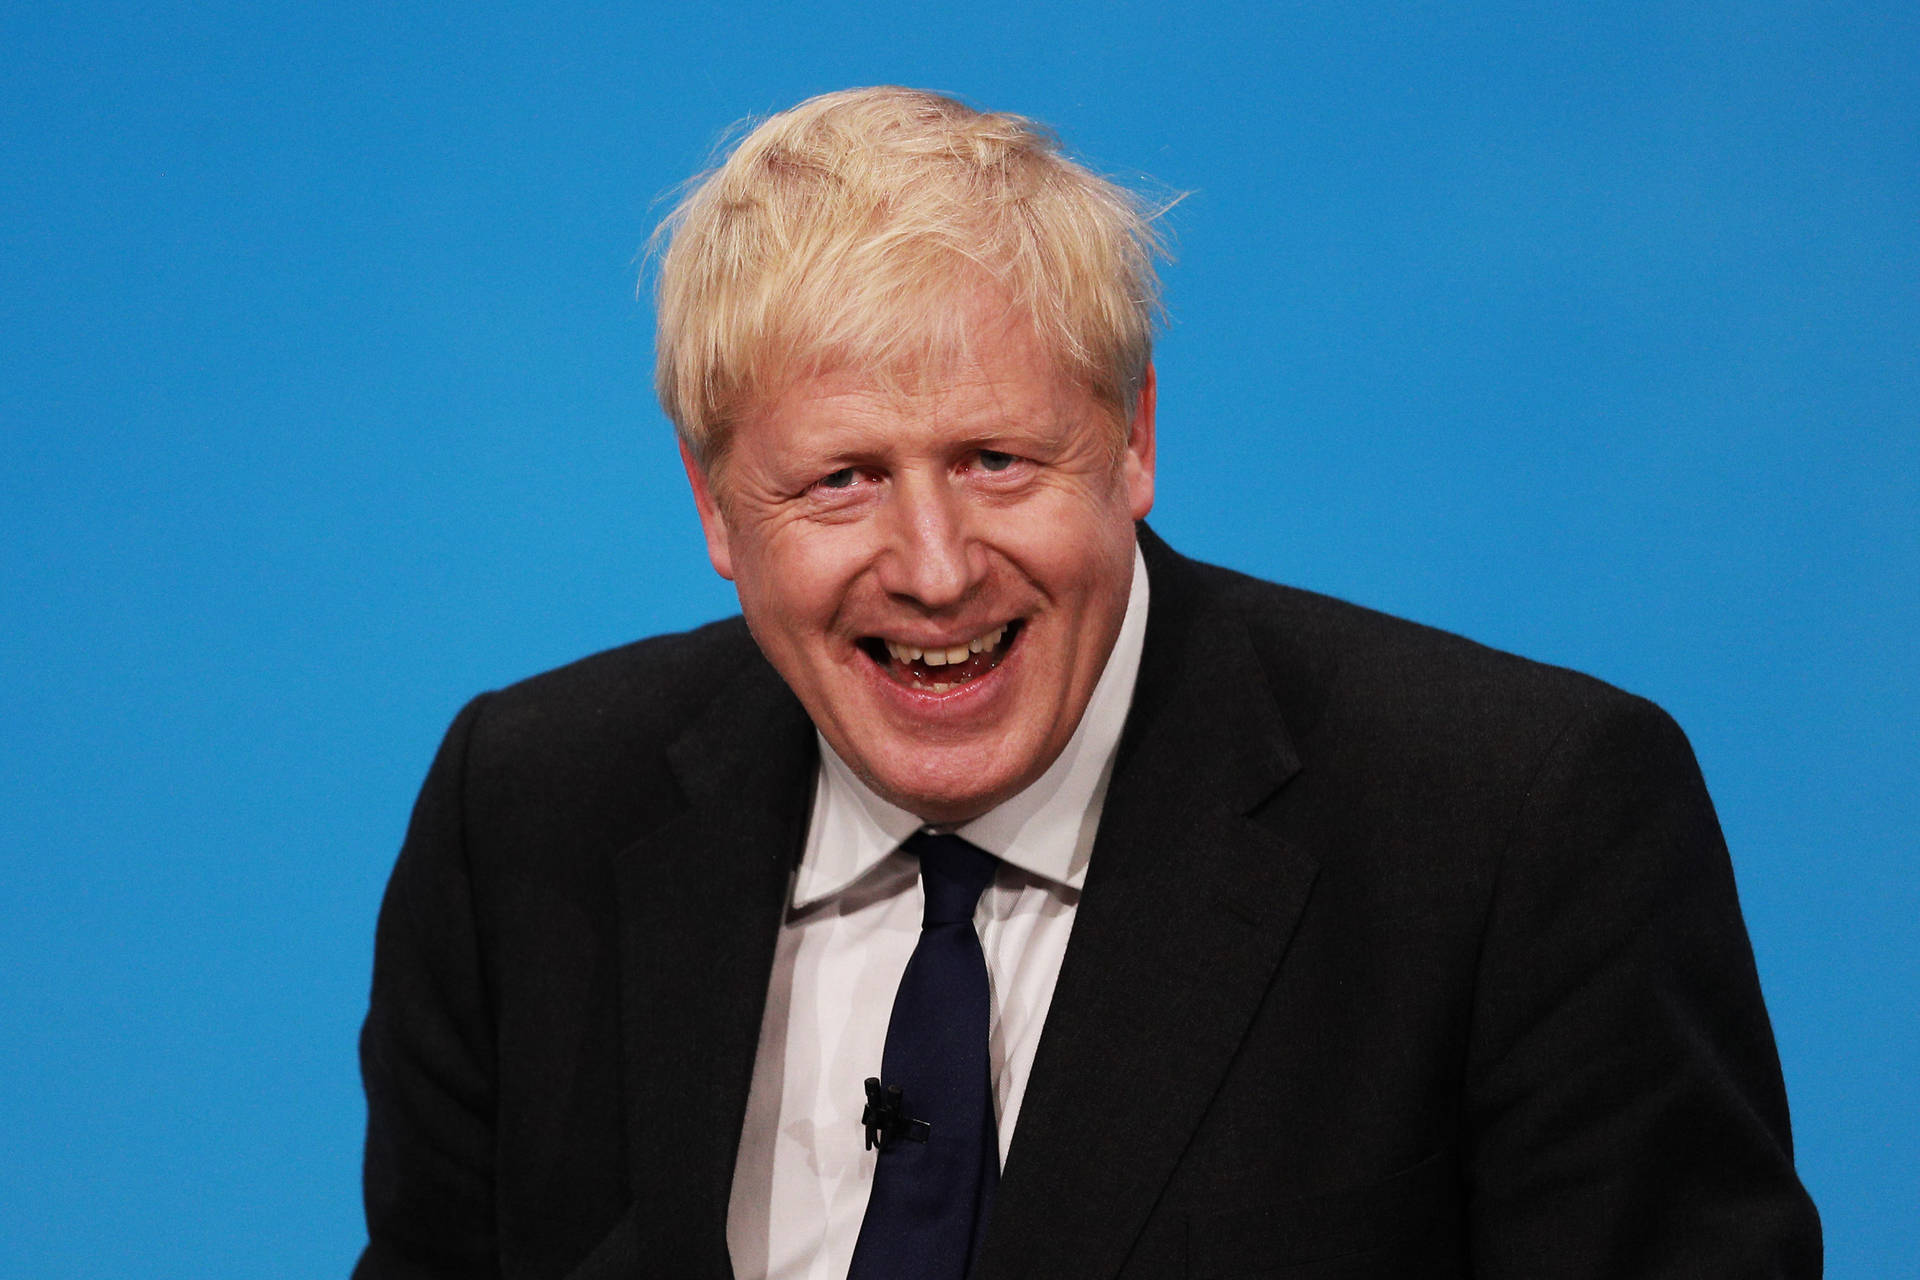 Laughing Boris Johnson On Suit Background